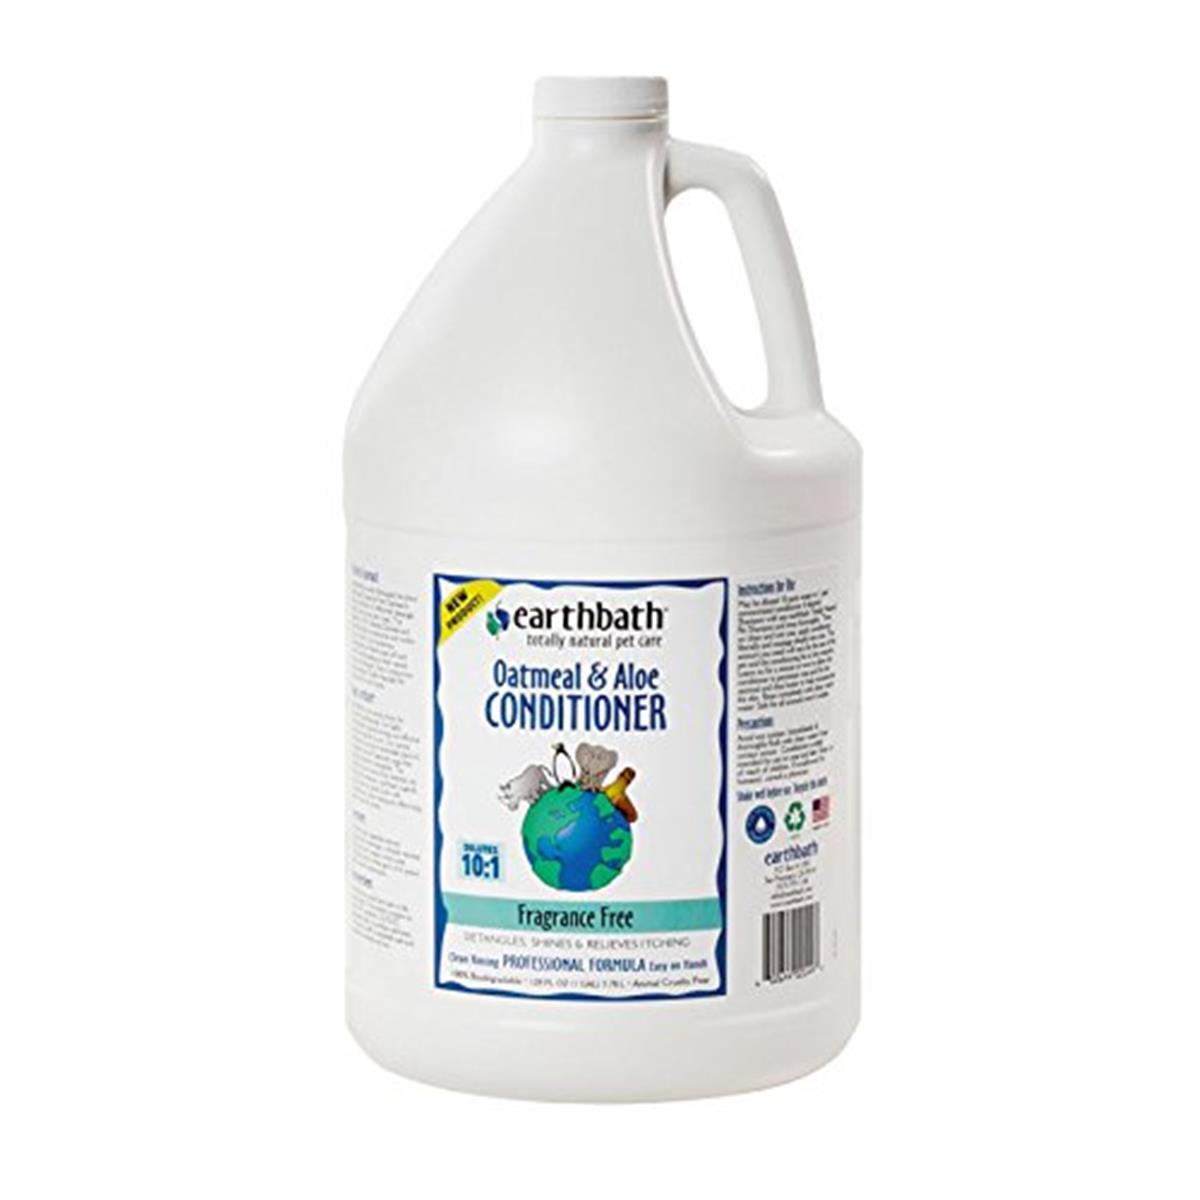 Eb02144 3.8 Litre Earthbath Oatmeal & Aloe Conditioner Fragrance